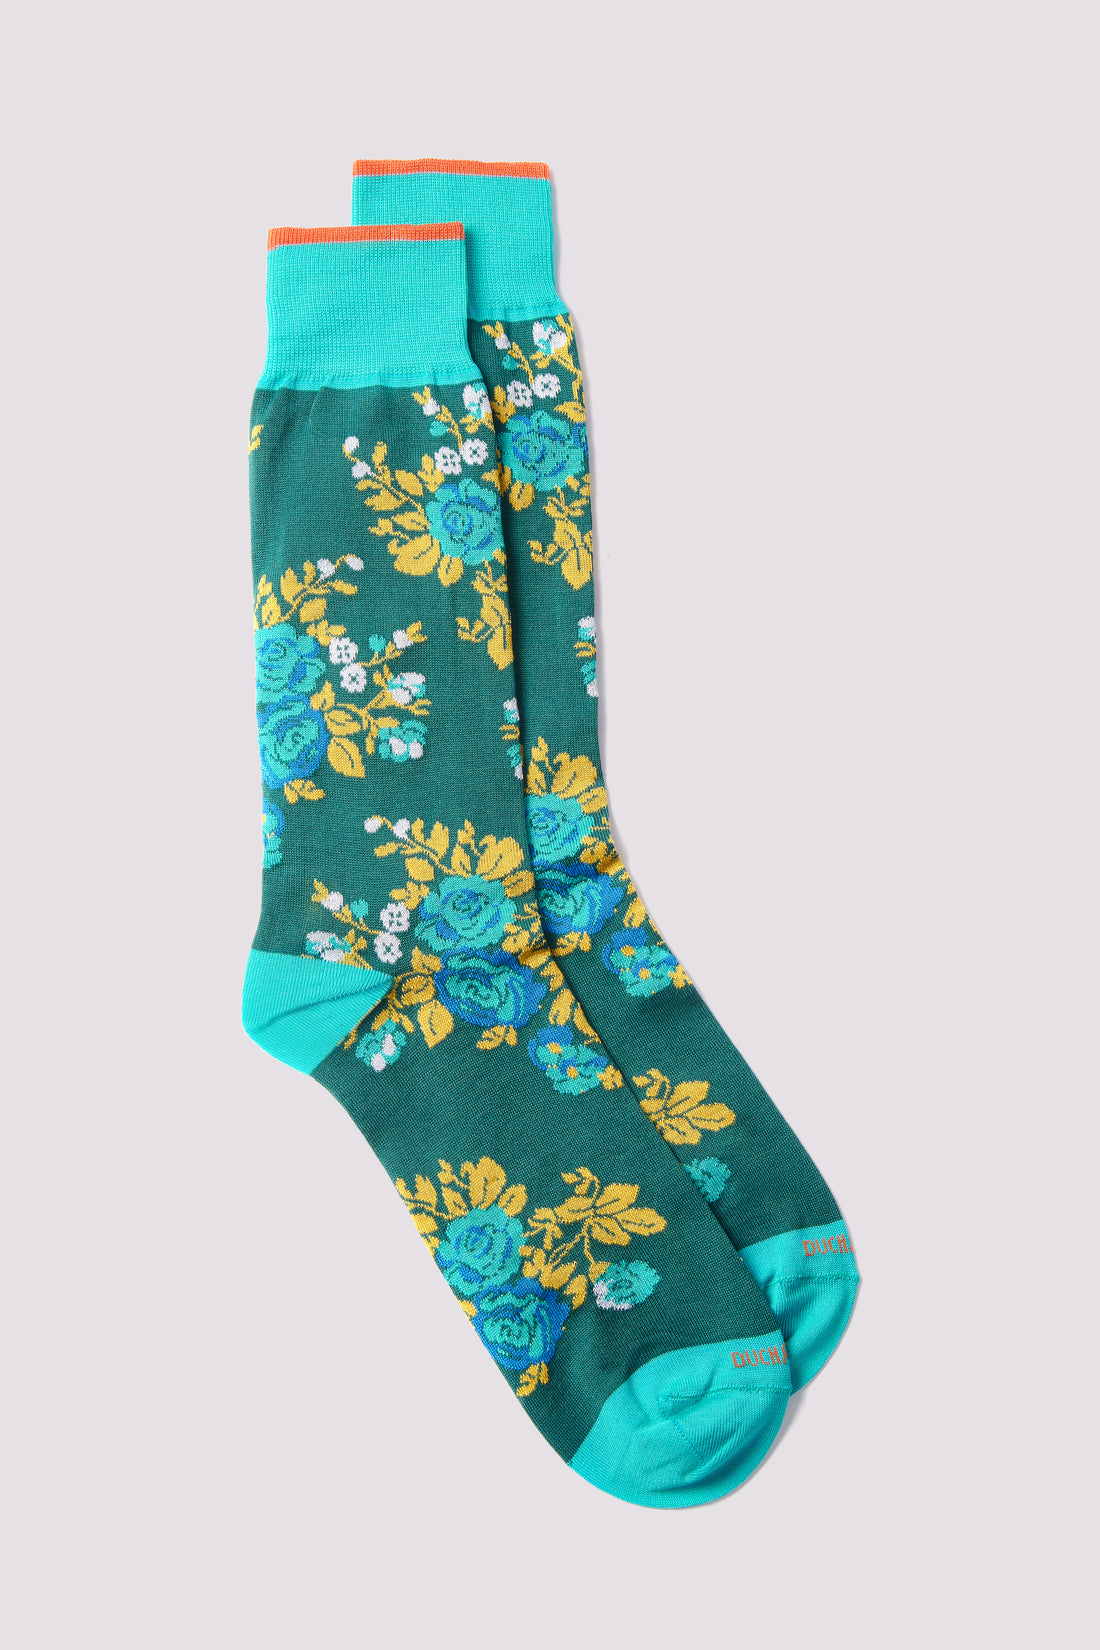 Rose Socks in Turquoise